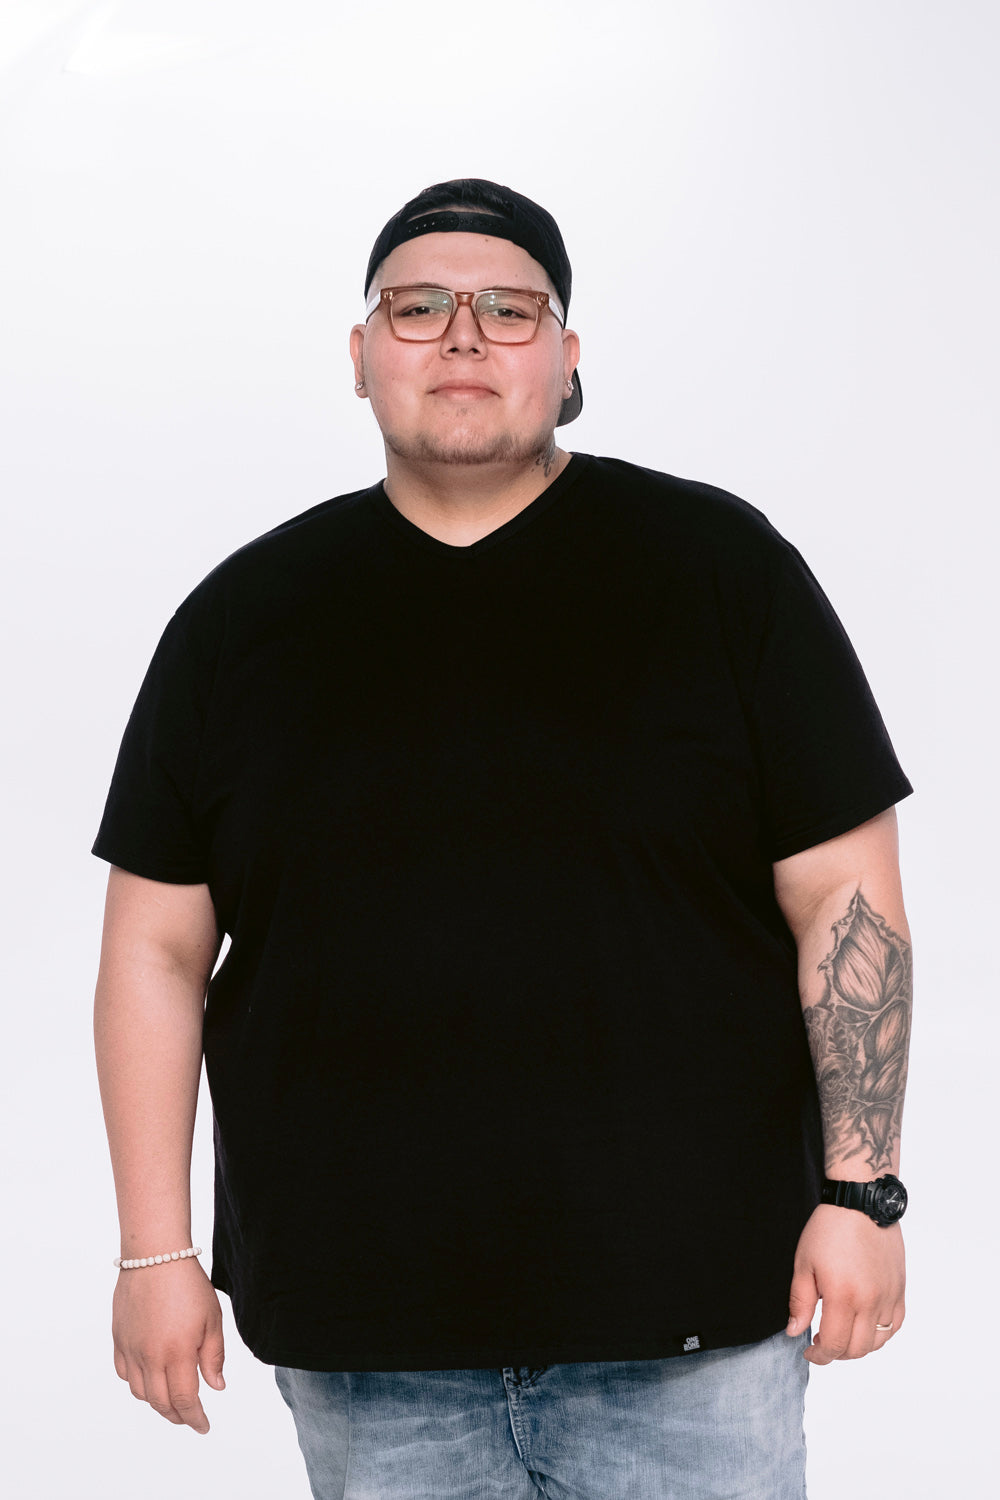 model-specs: Tony is 5-11 | 400 lbs | size 5